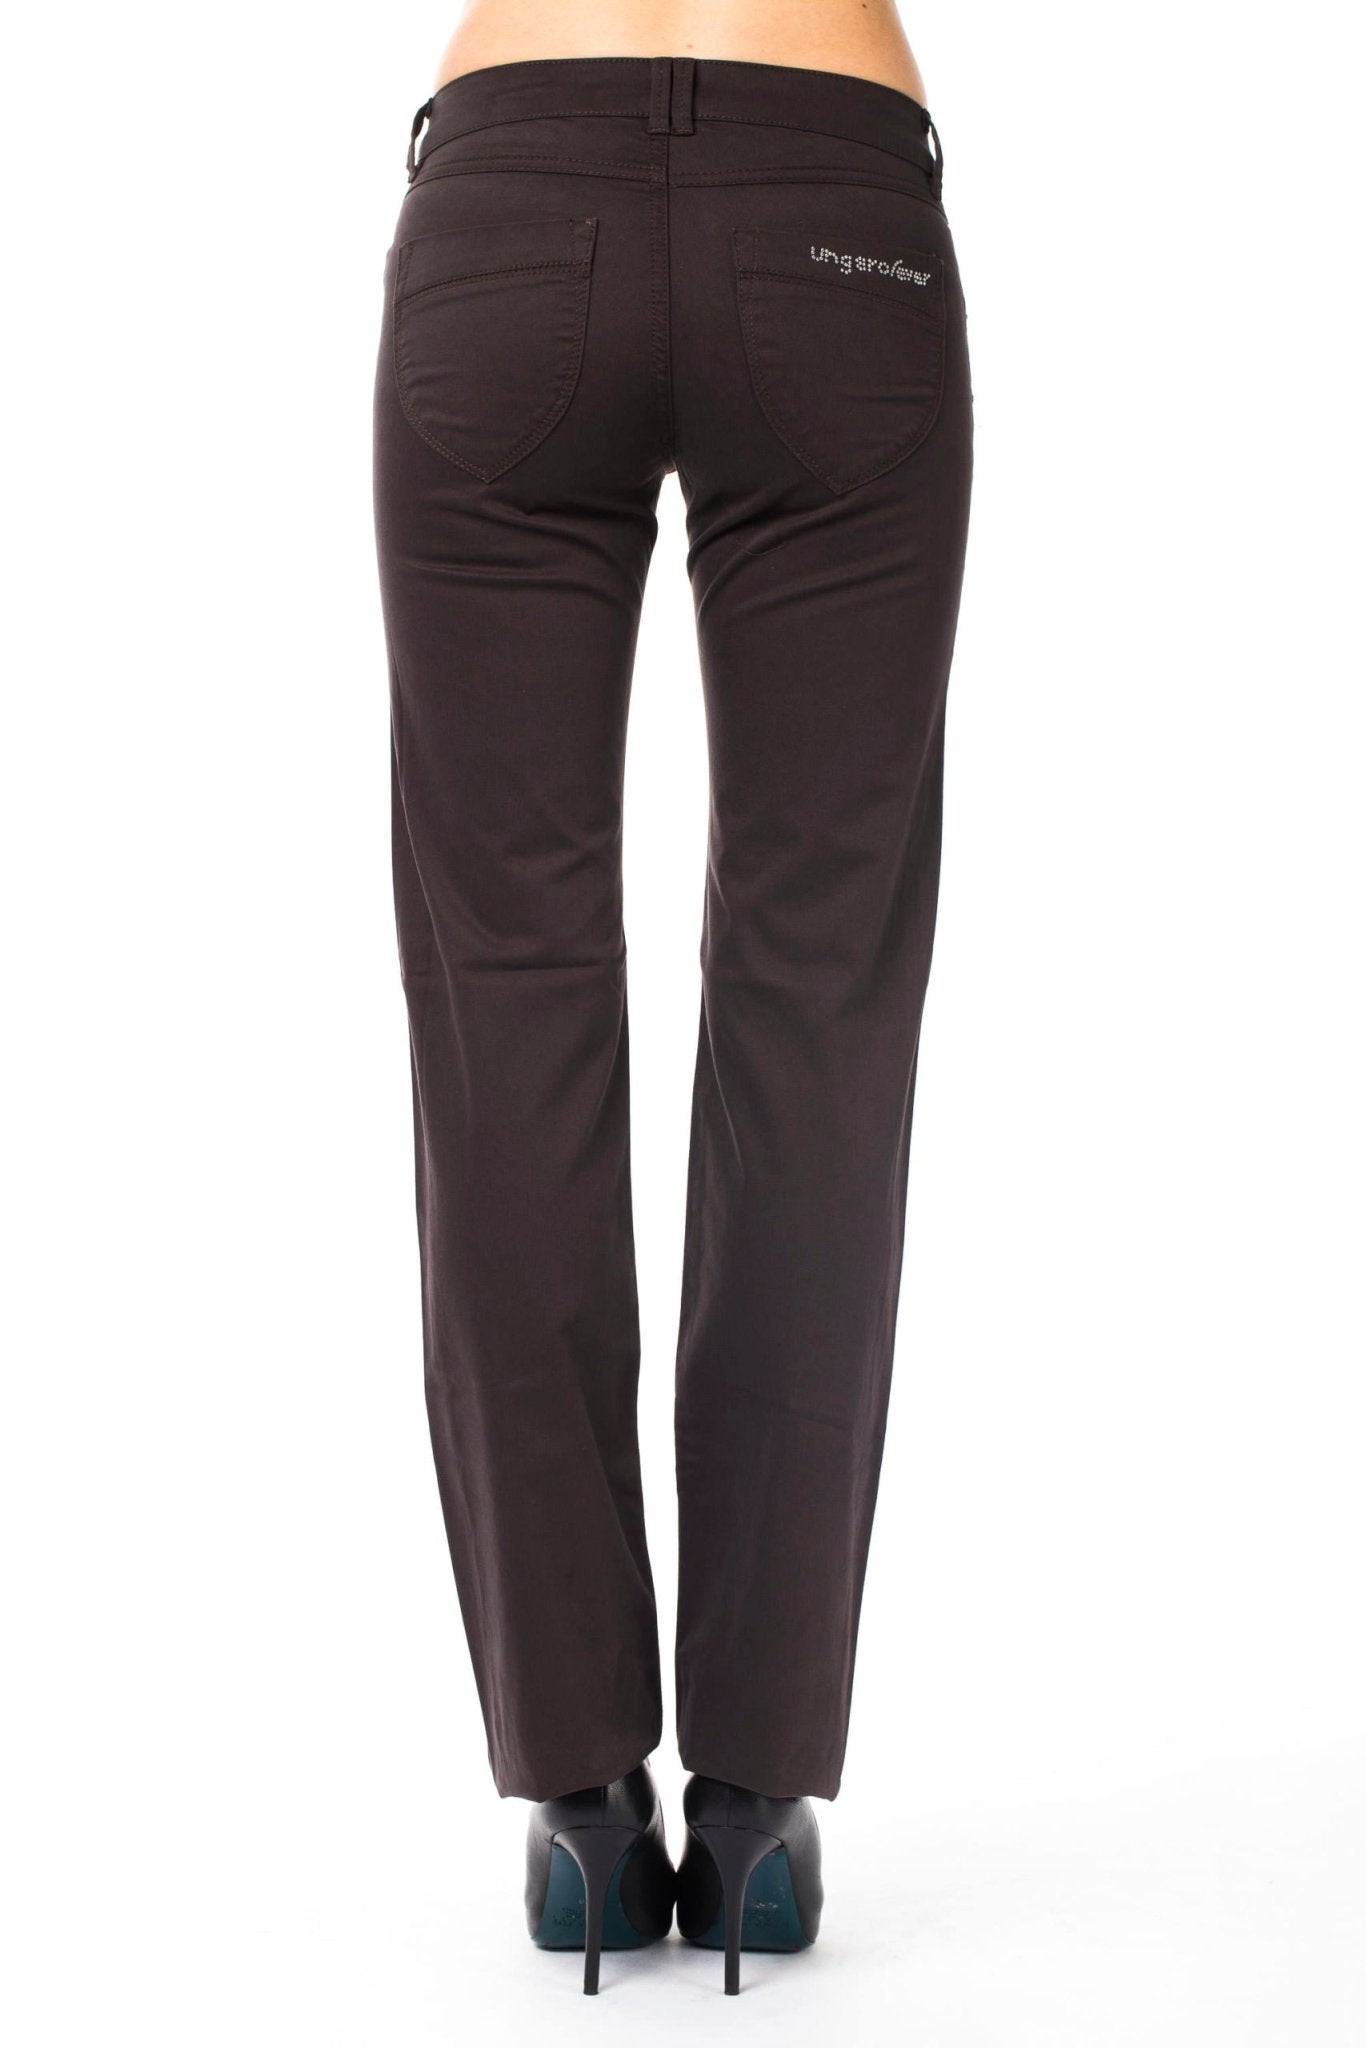 Ungaro Fever Brown Cotton Jeans & Pant - Fizigo